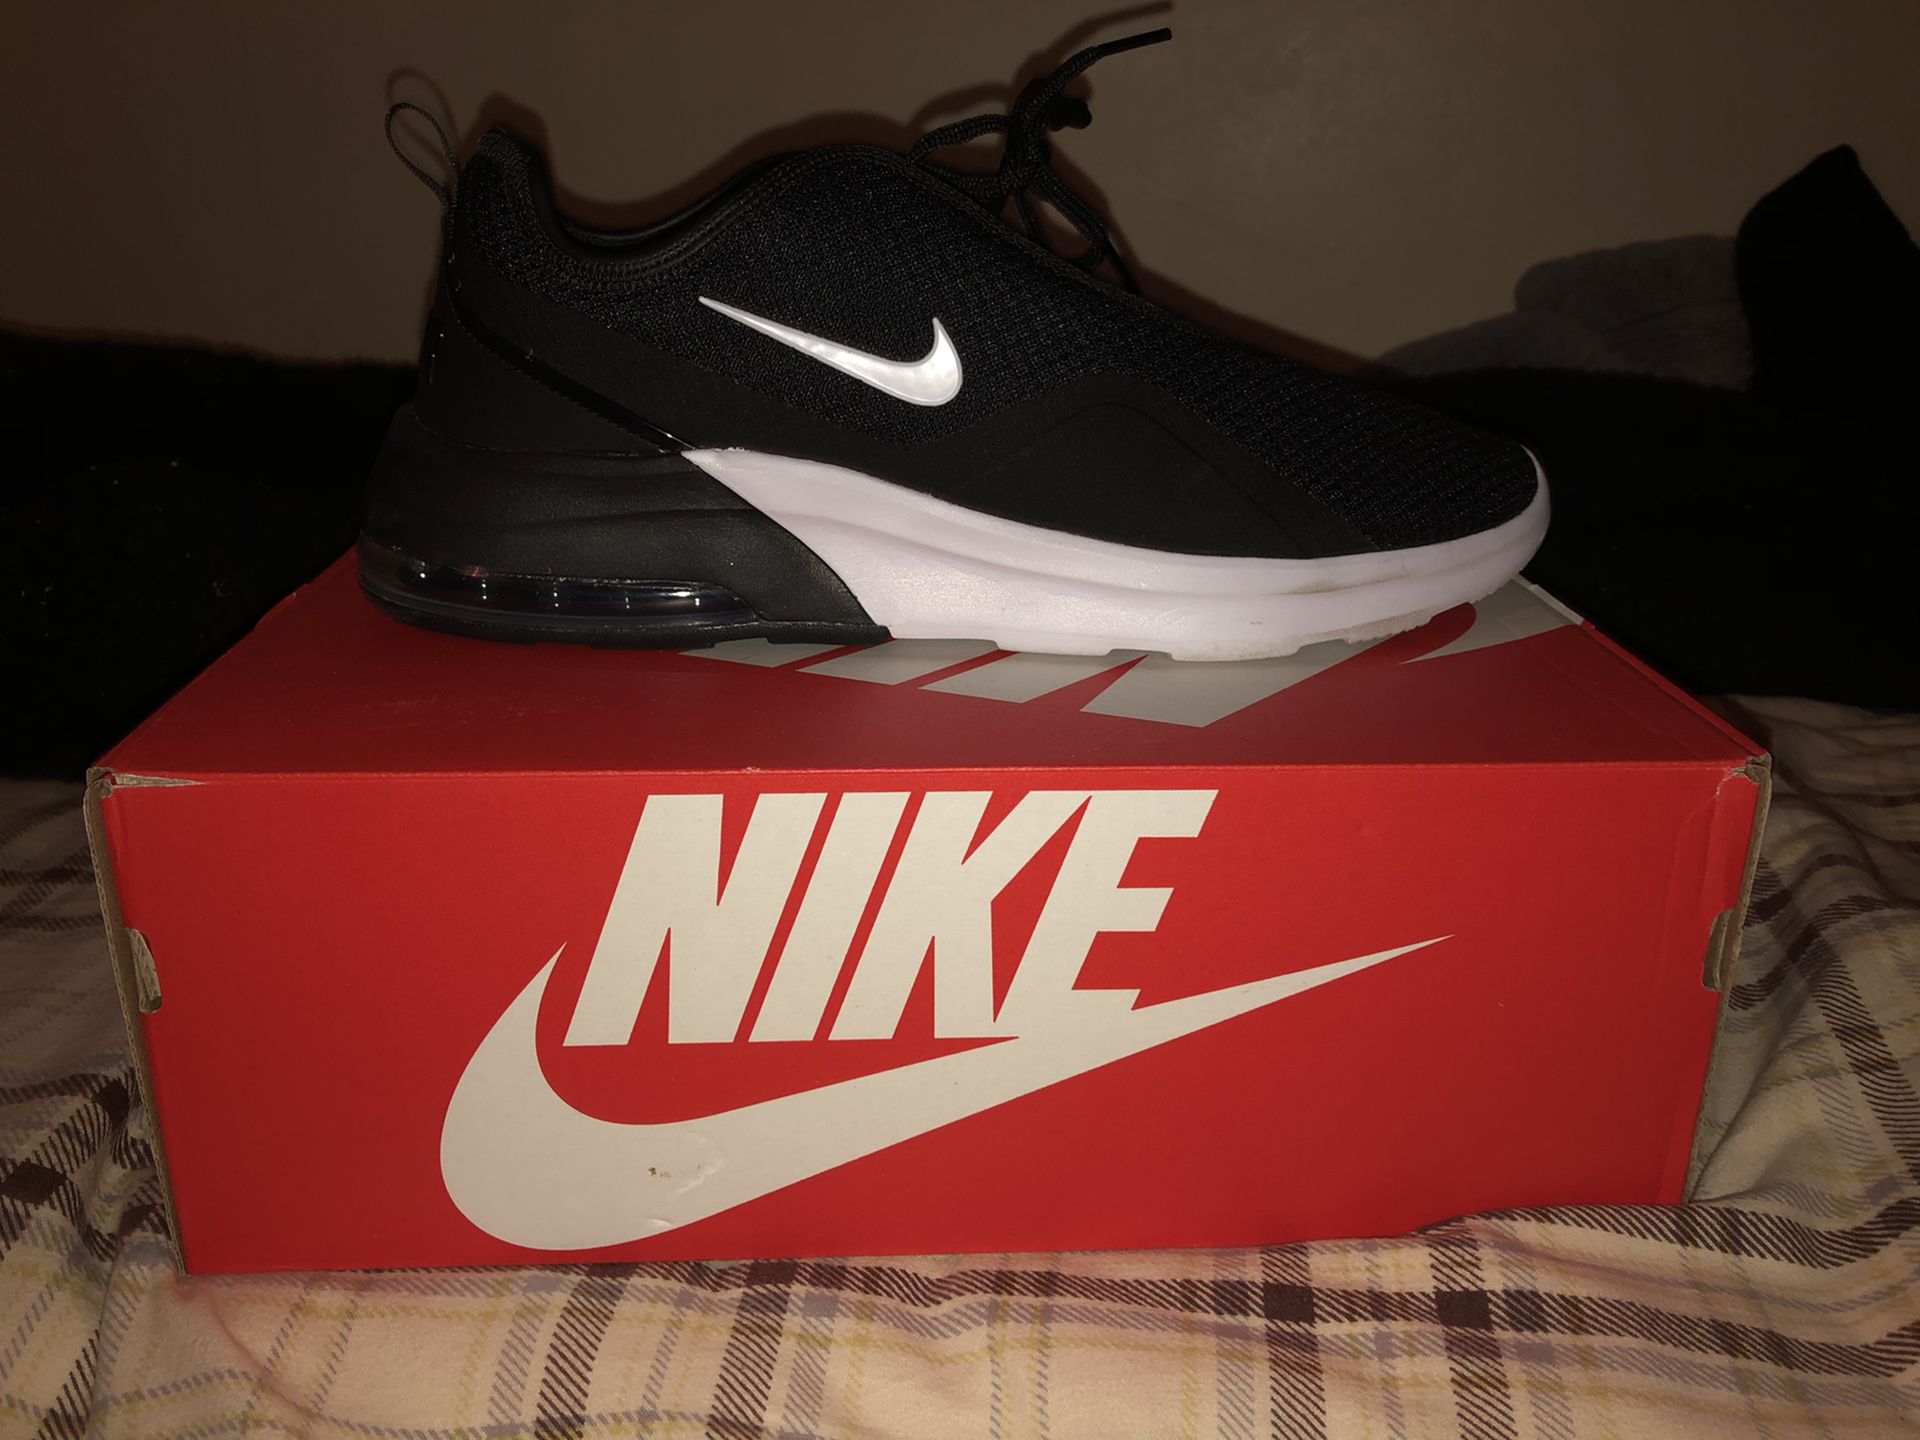 Nike Men’s Shoes Size 13